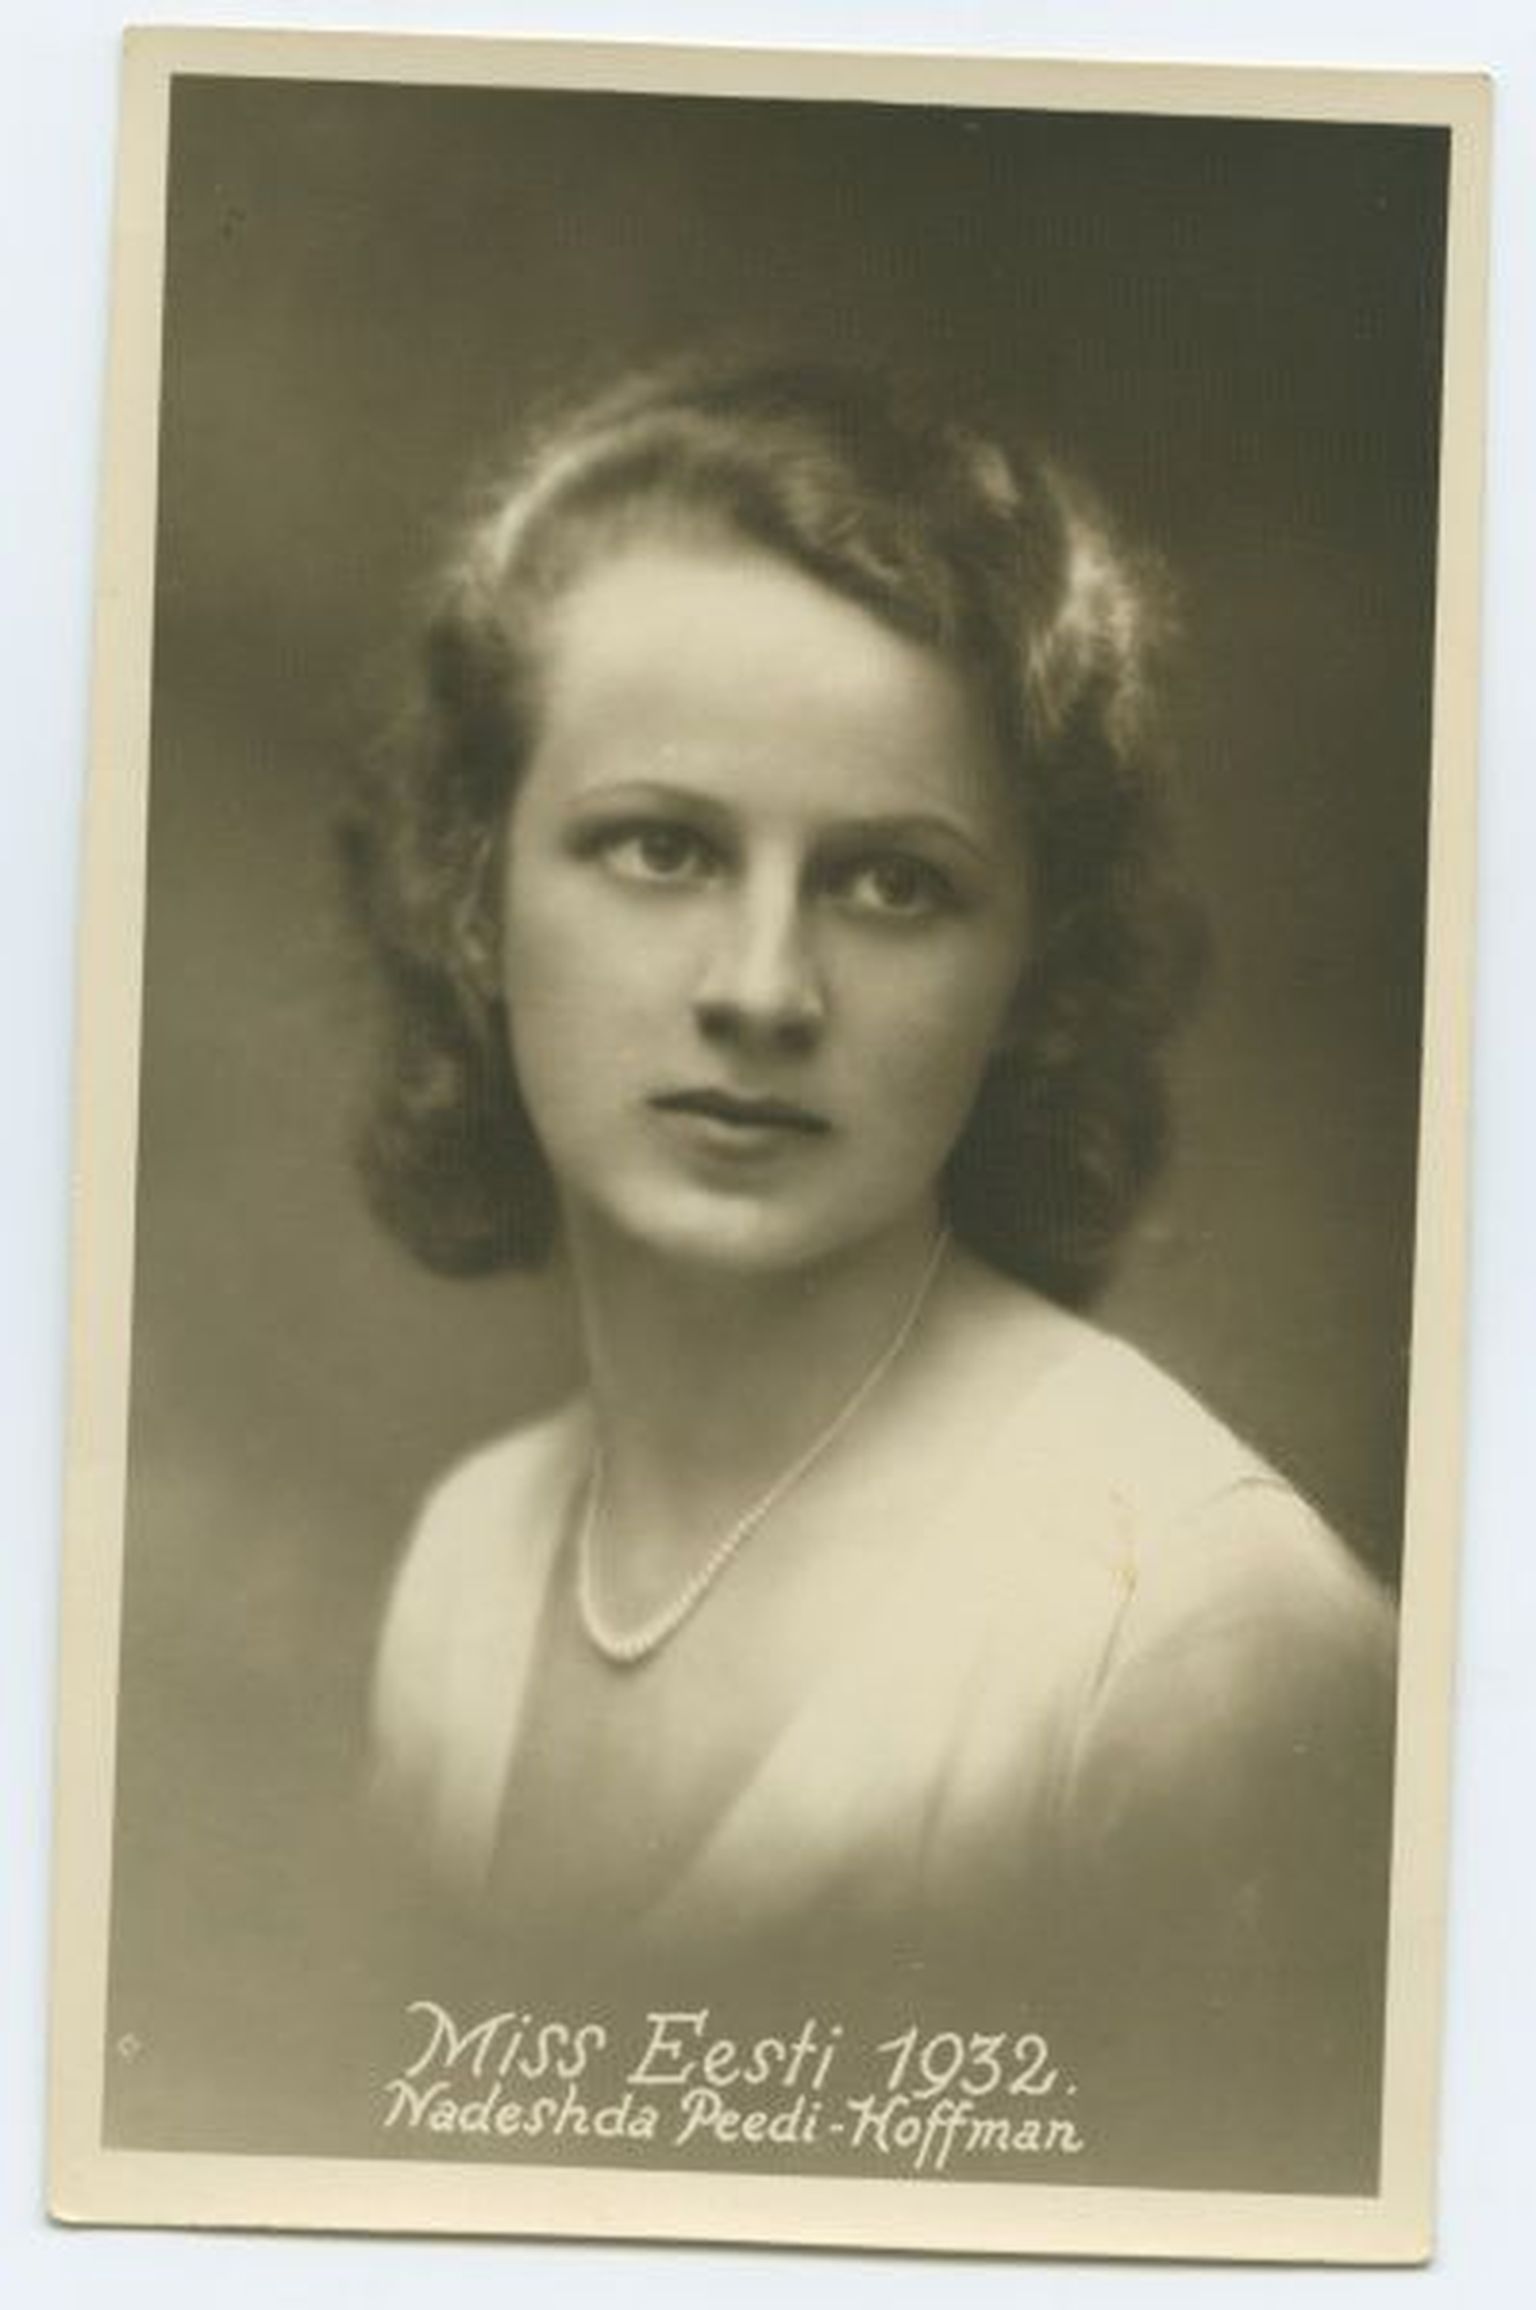 Miss Eesti 1932, Nadeshda Peedi-Hoffman., TLM F 10285:15, Tallinna Linnamuuseum